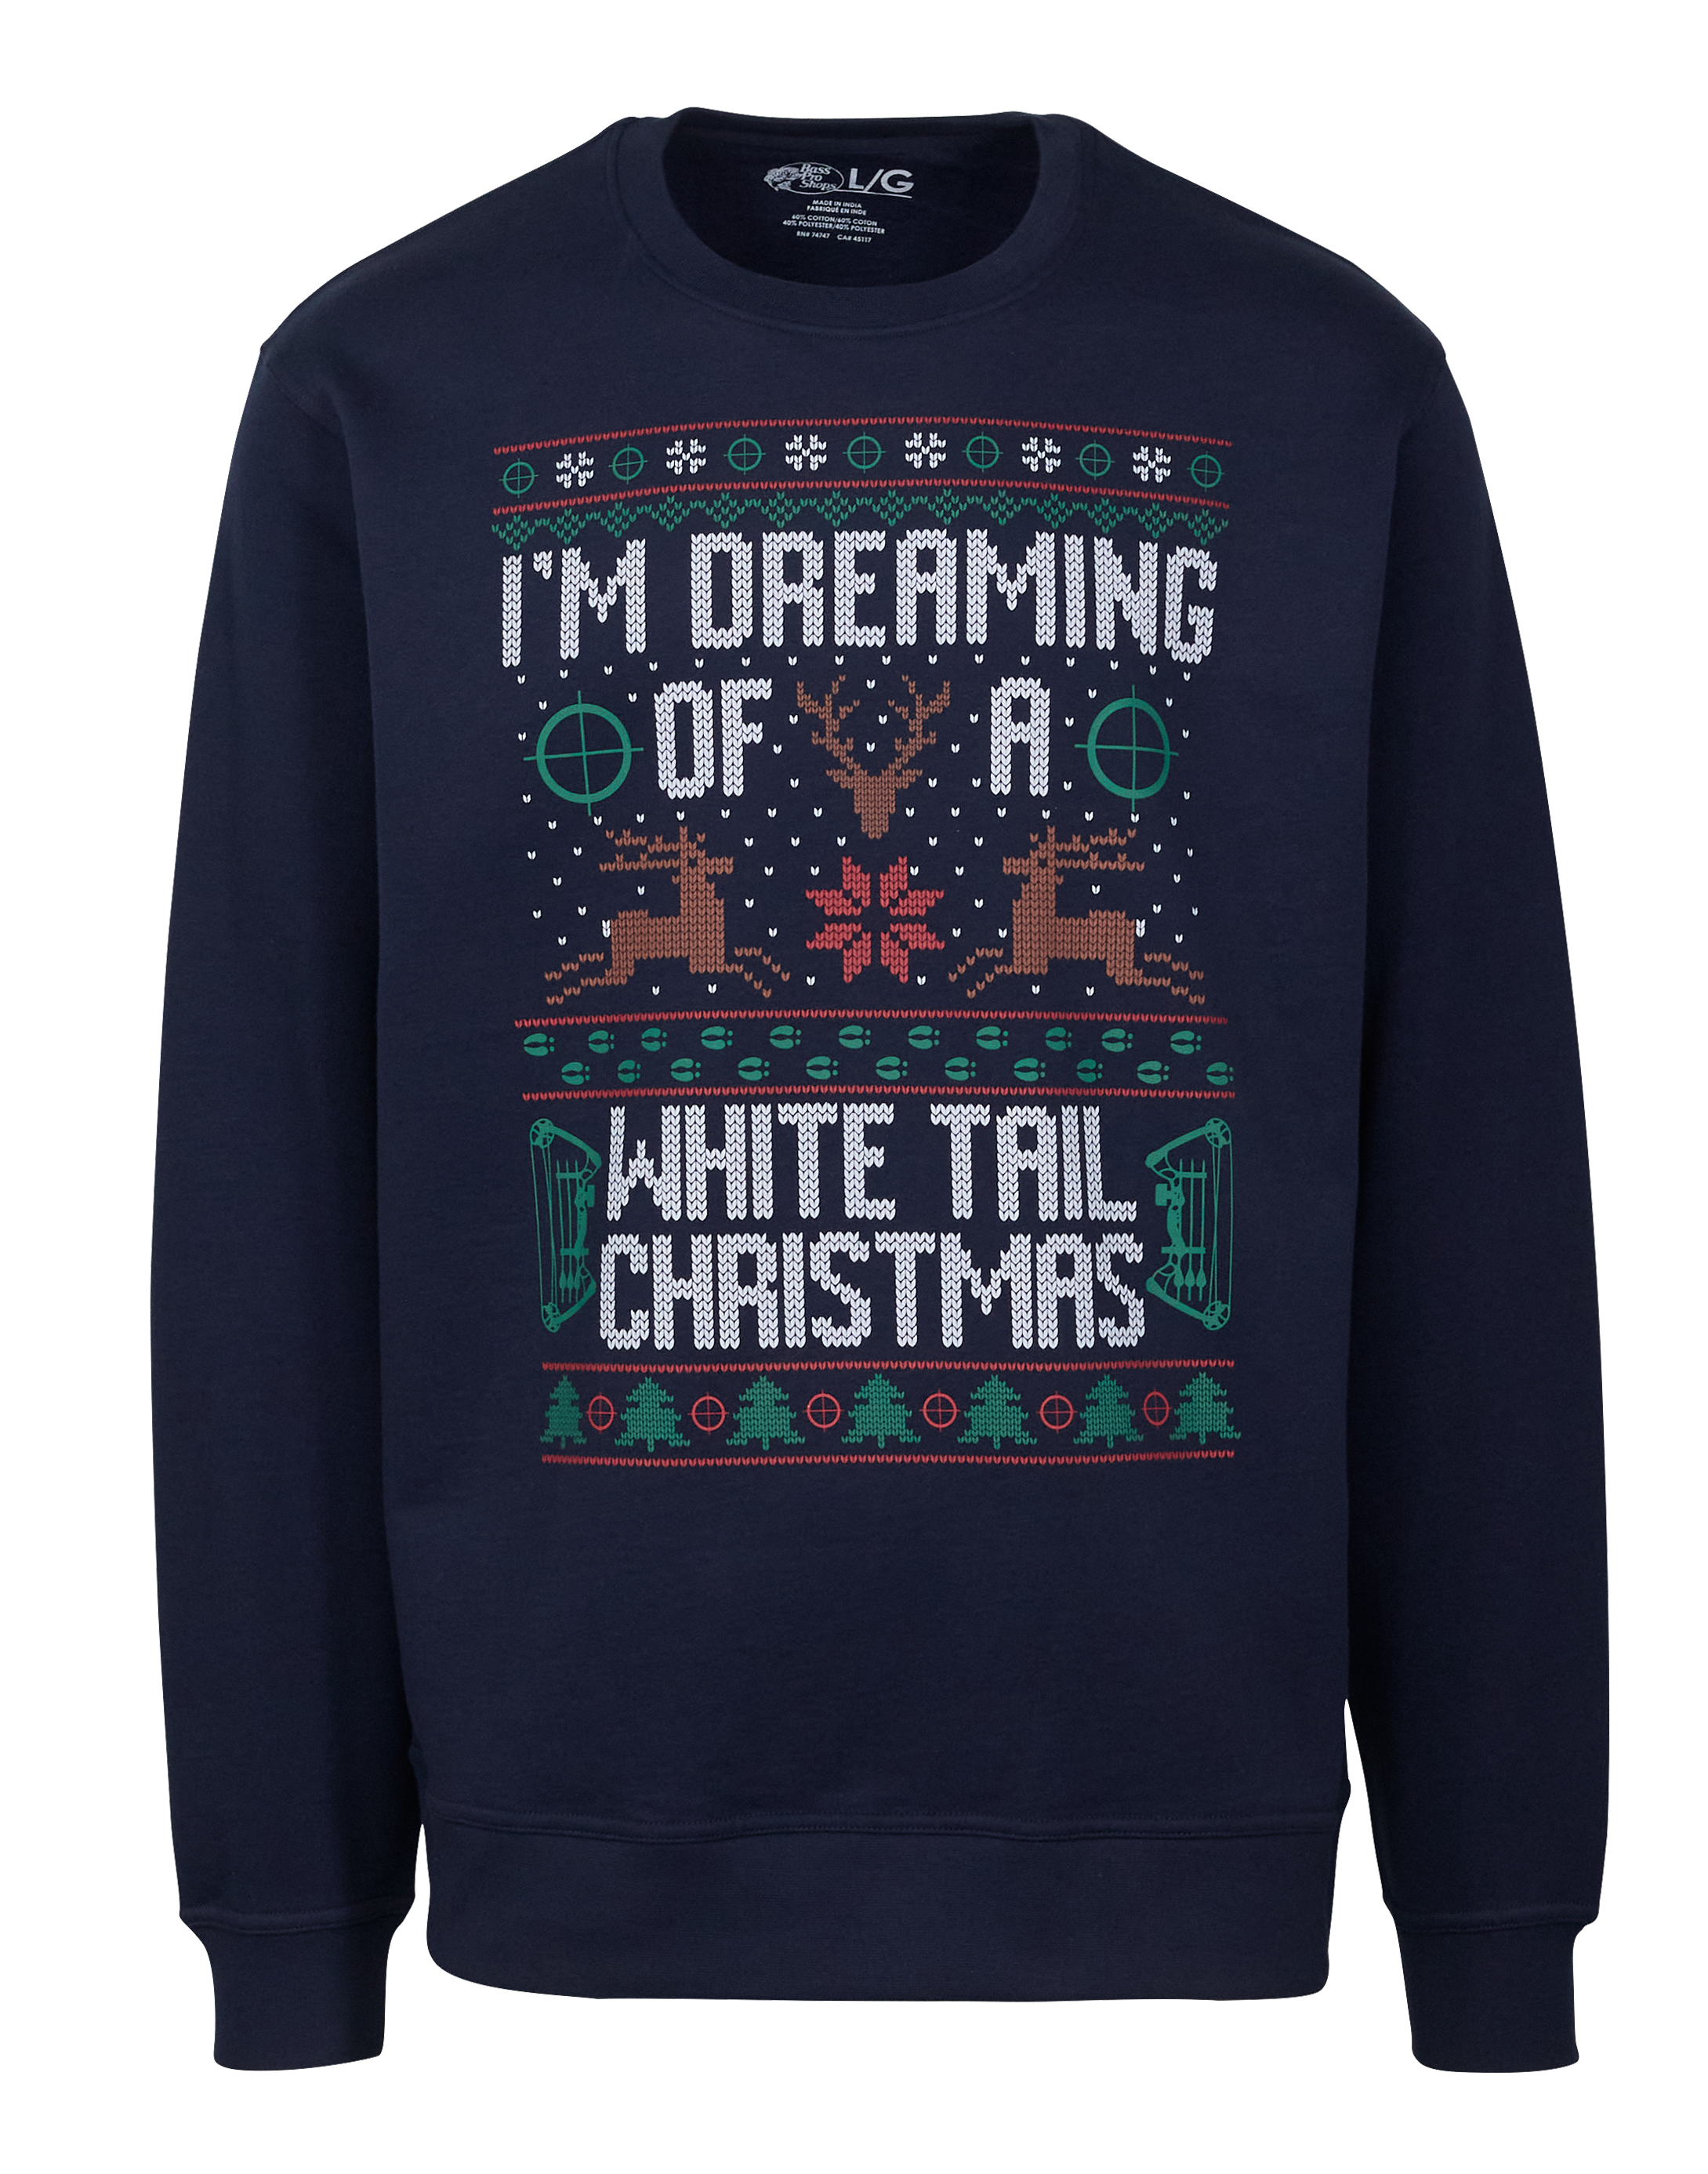 Bass Pro Shops Whitetail Christmas Sweatshirt for Adults